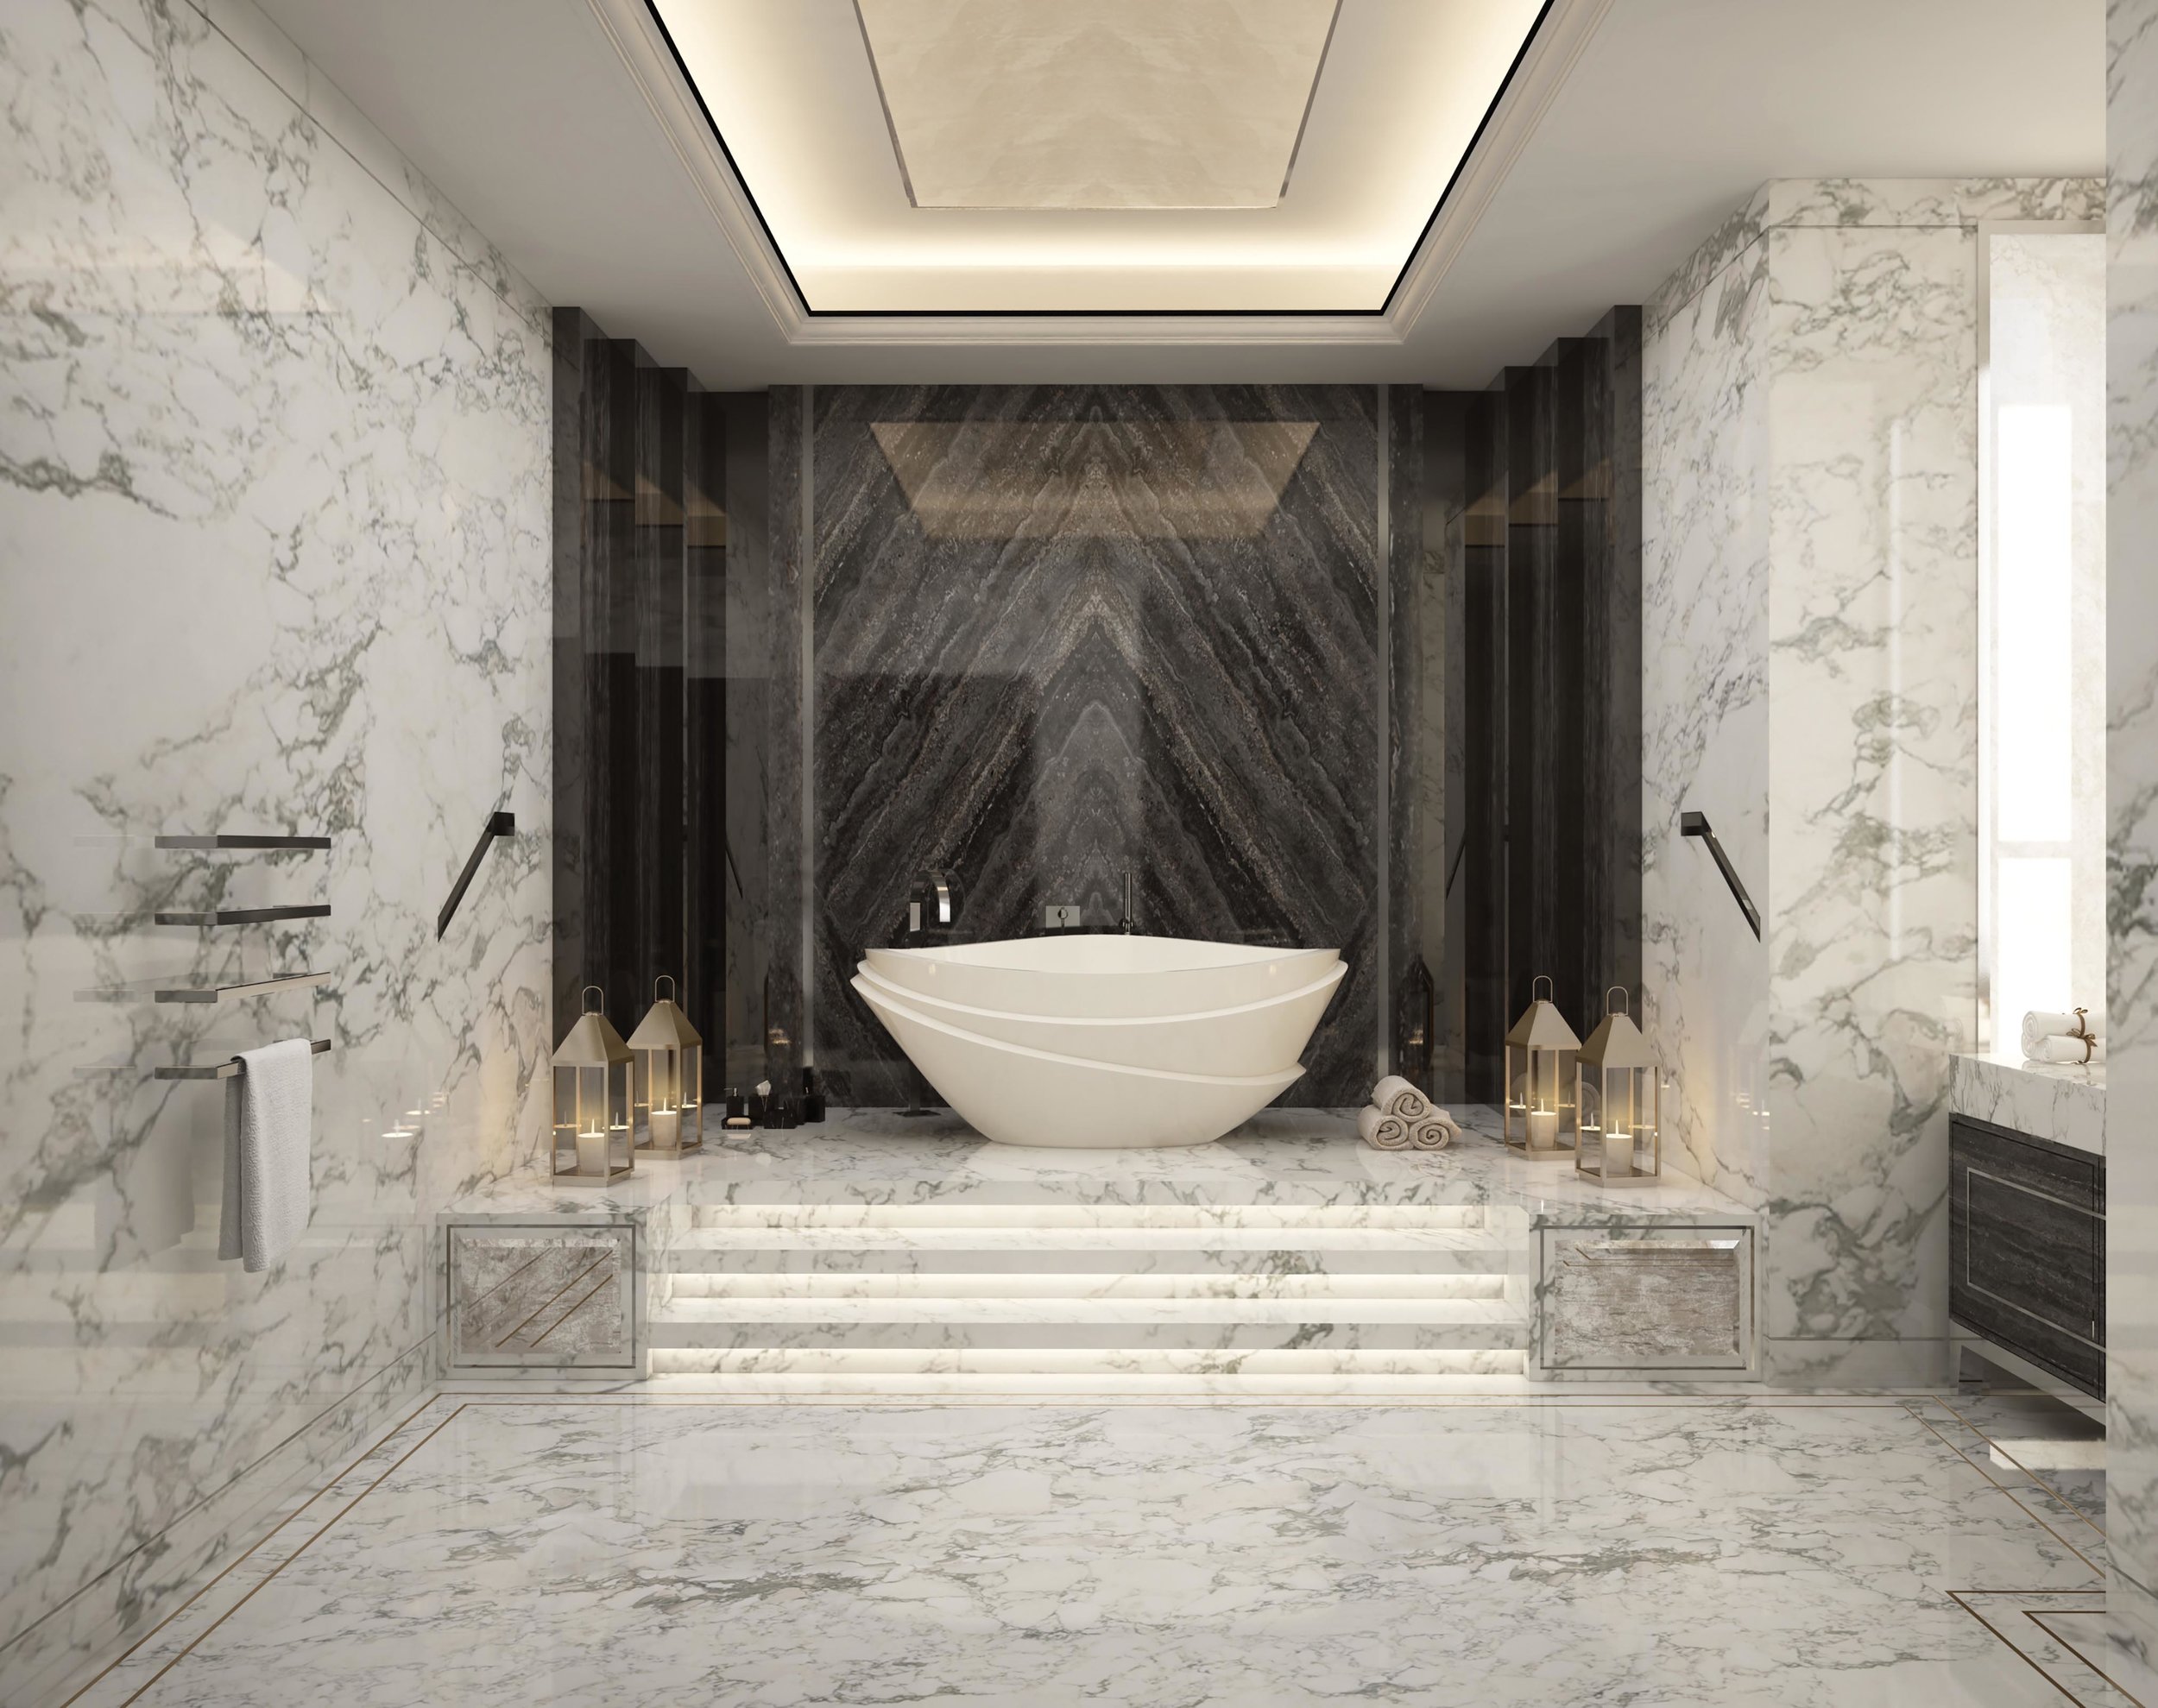 Emirates Hills master bathroom.rsz.jpg